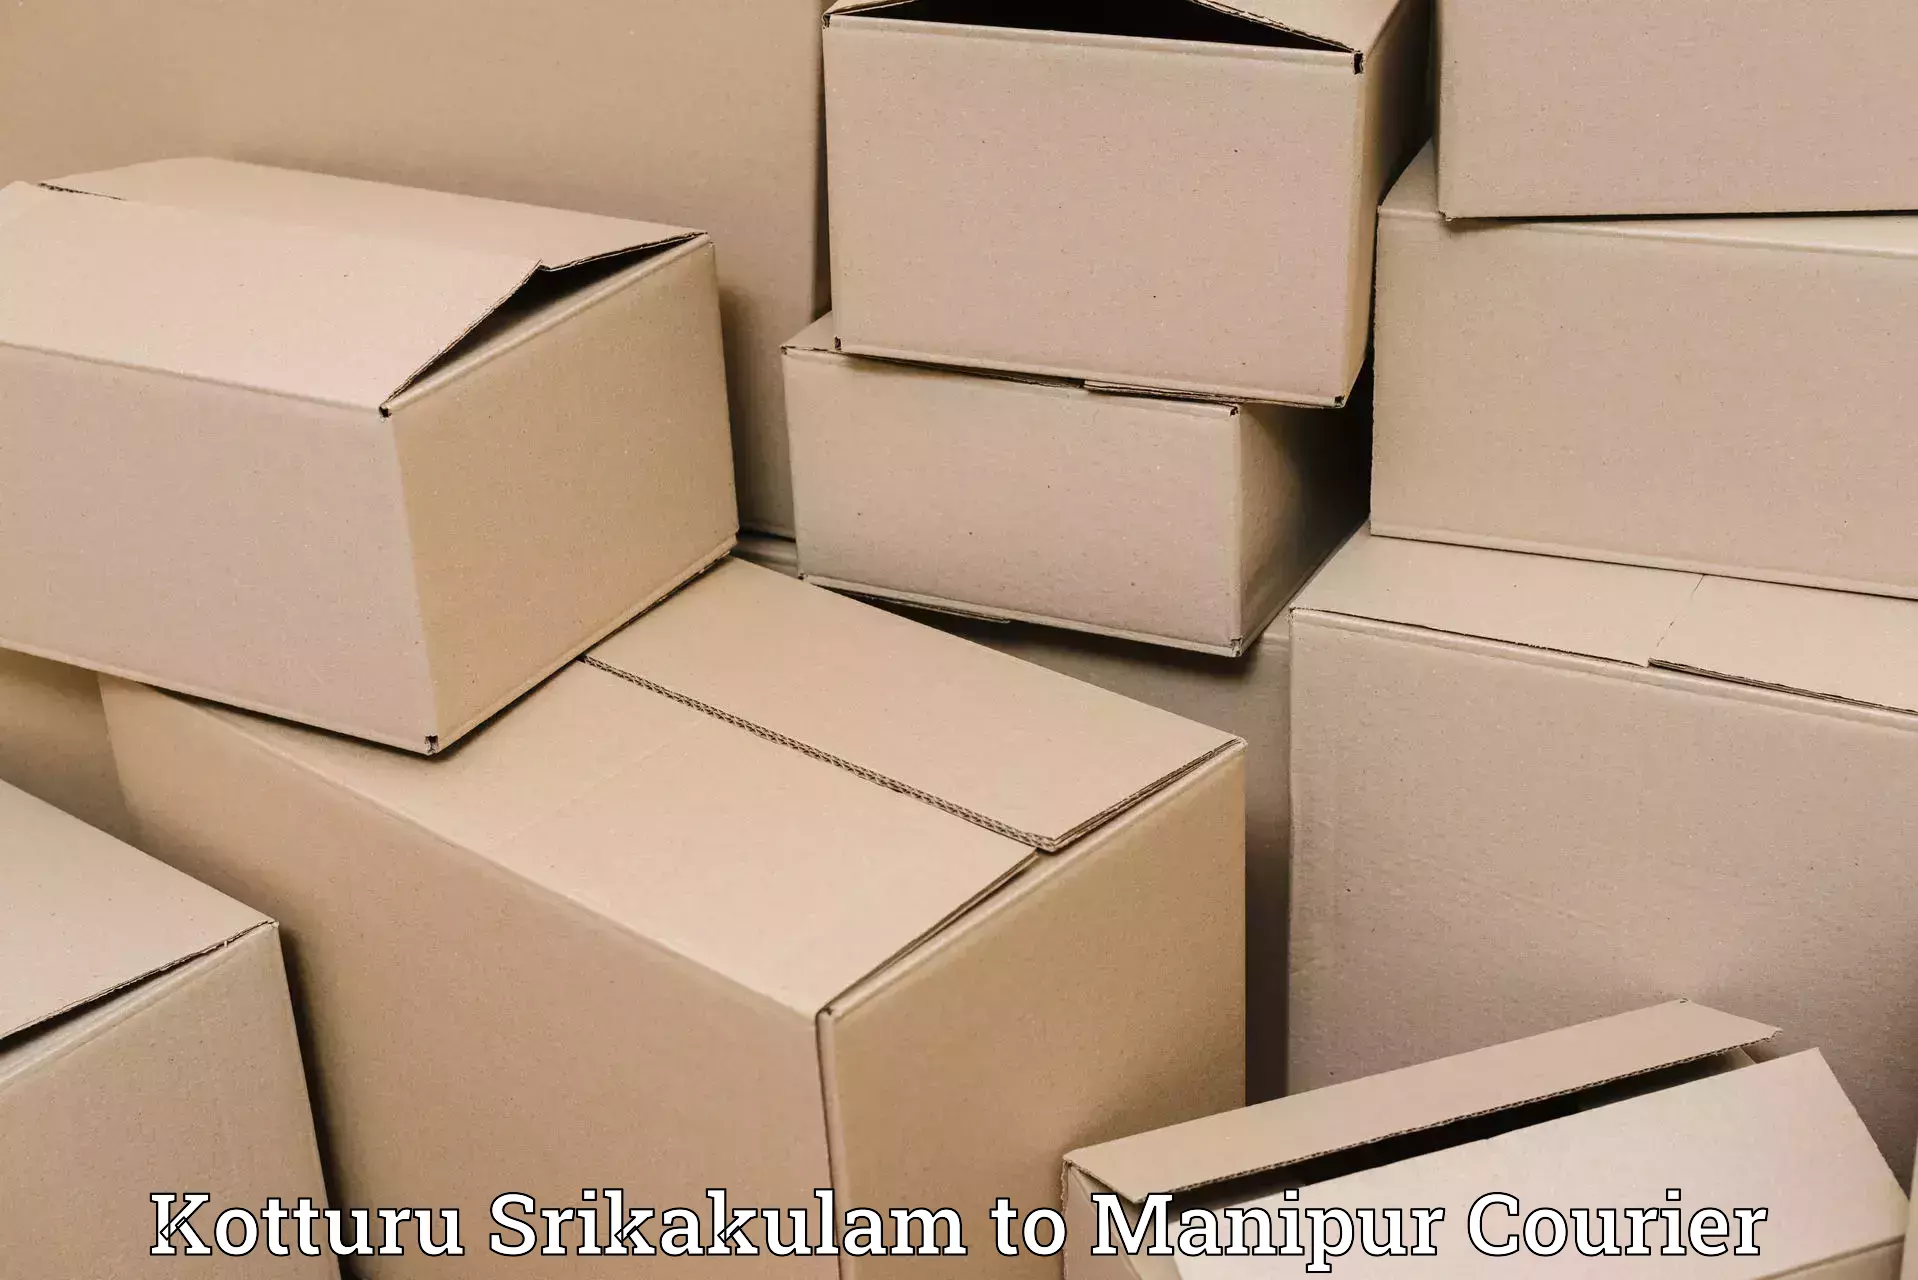 Reliable courier services Kotturu Srikakulam to Imphal